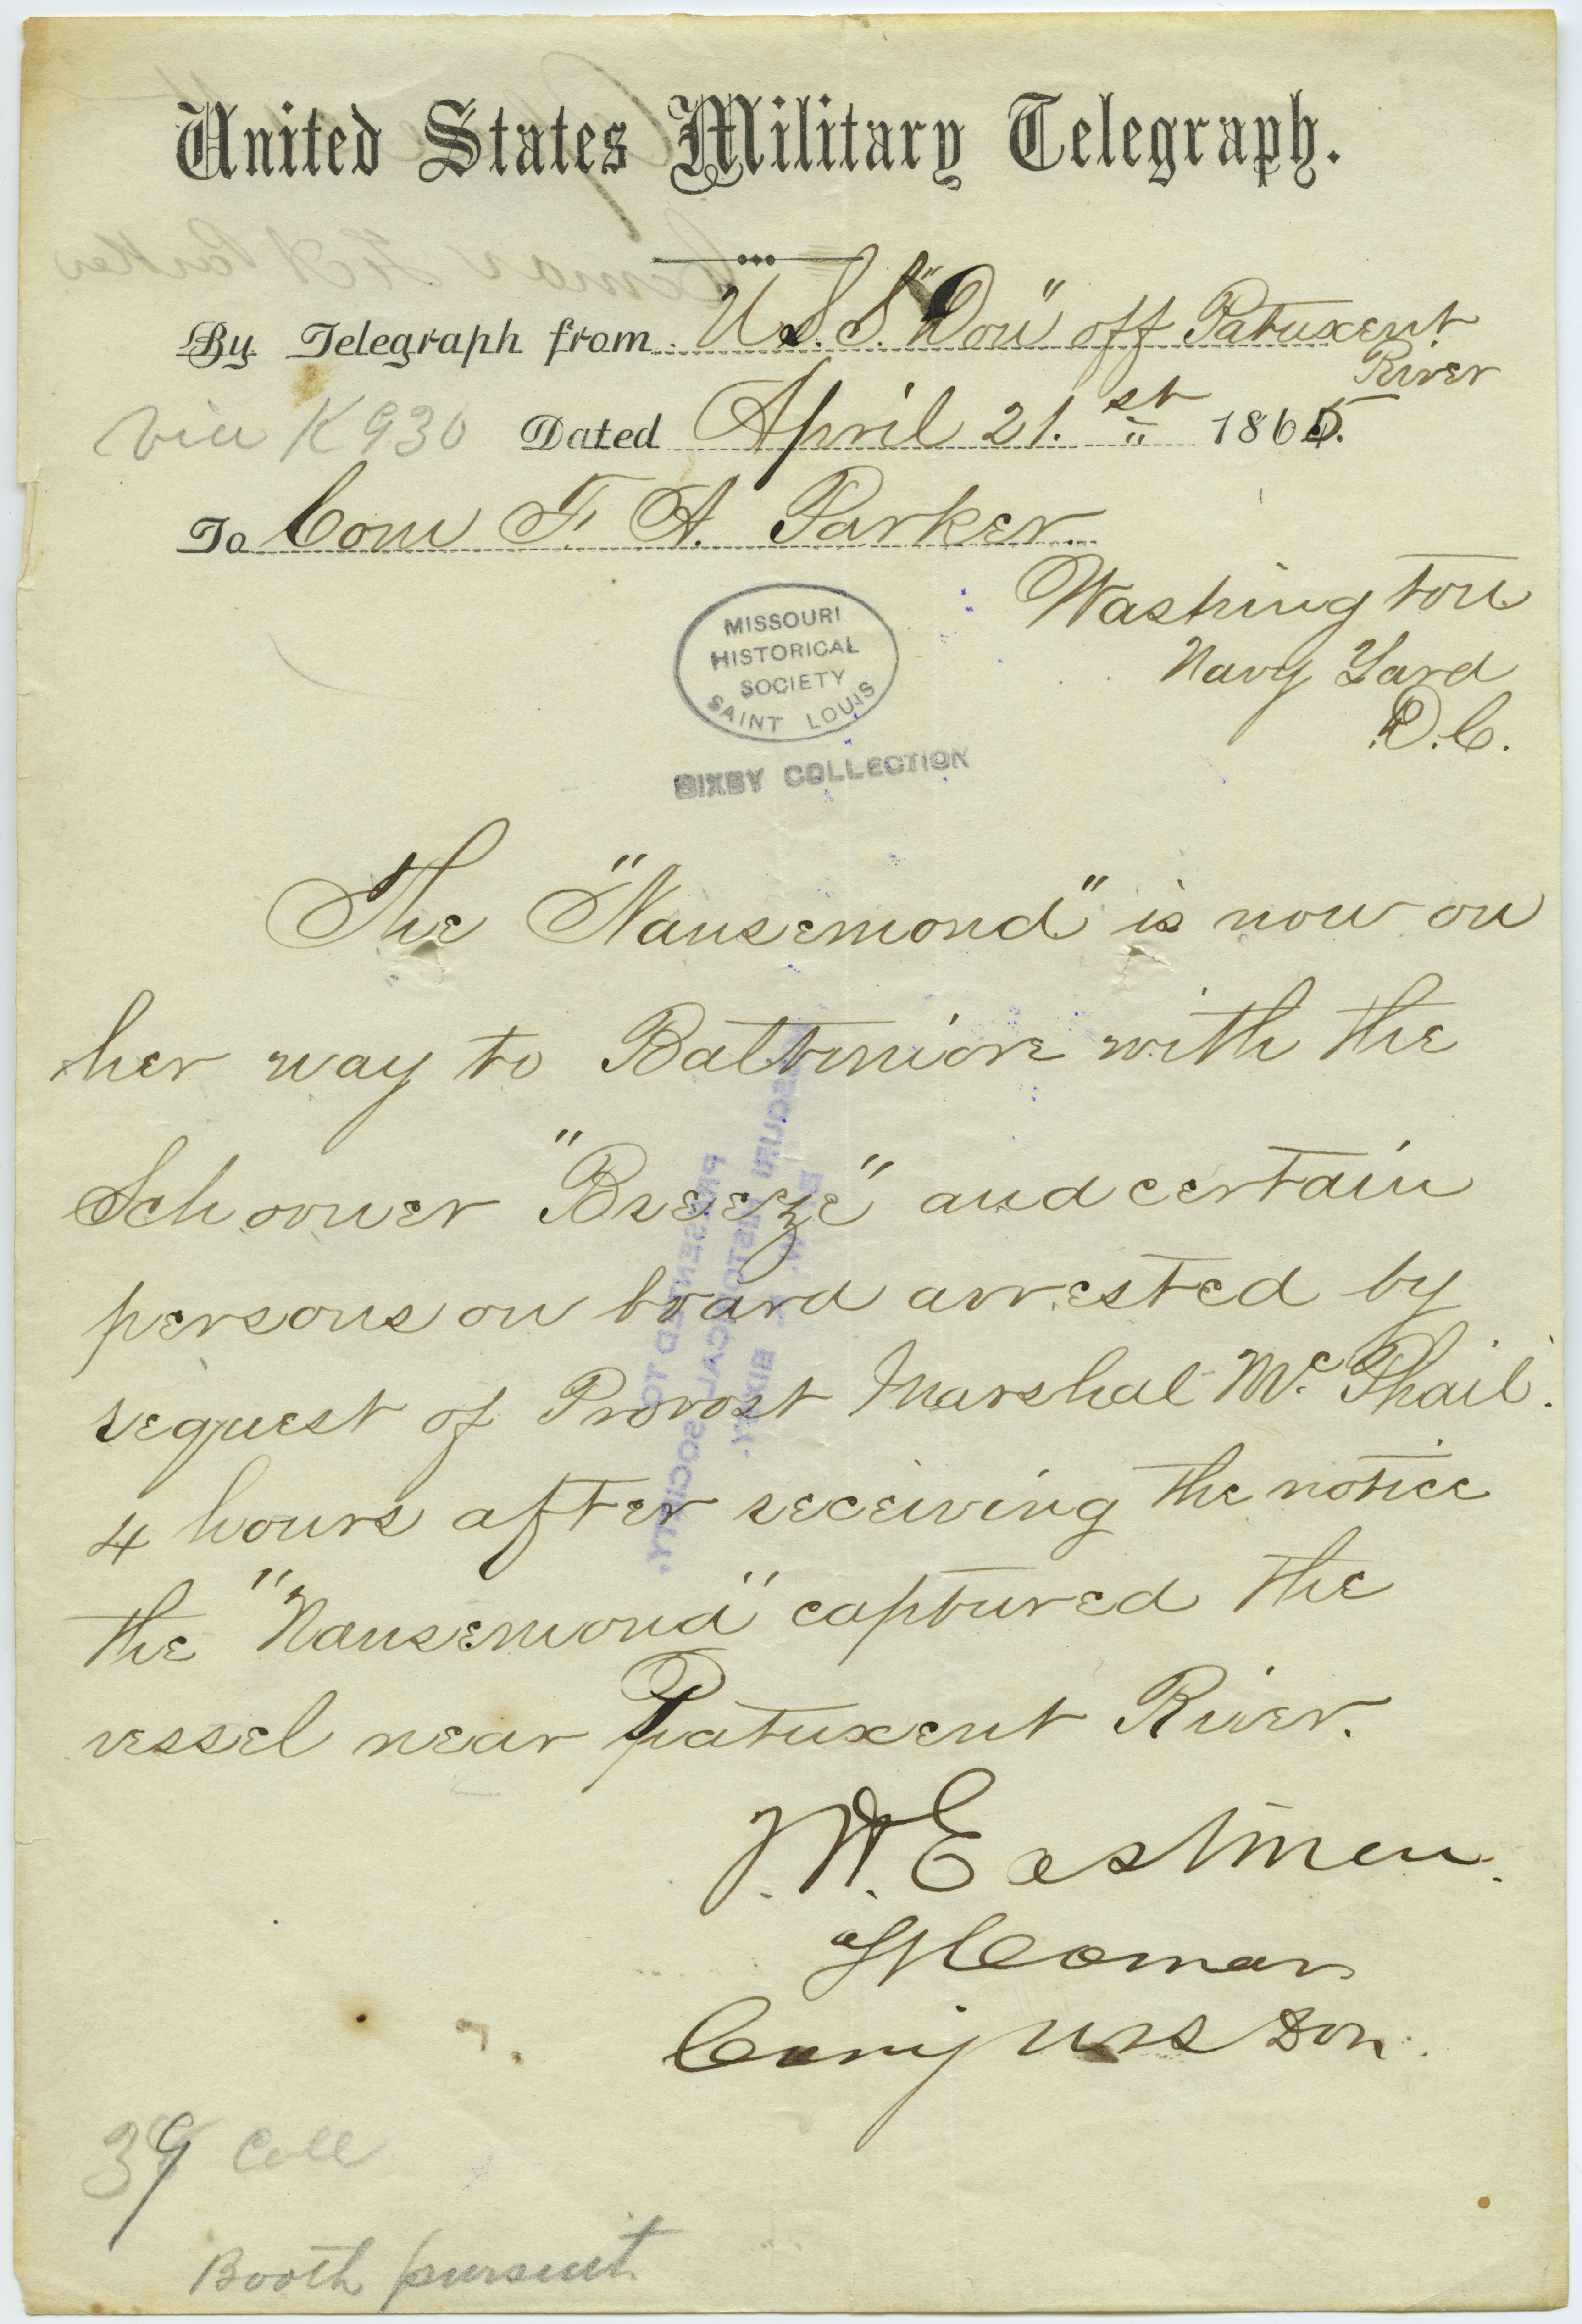 Contemporary copy of telegram of T.W. Eastman, Lt. Comdr., Comg. U.S.S. Don off Patuxent River, to Com. F.A. Parker, Washington, Navy Yard, D.C., April 21, 1865